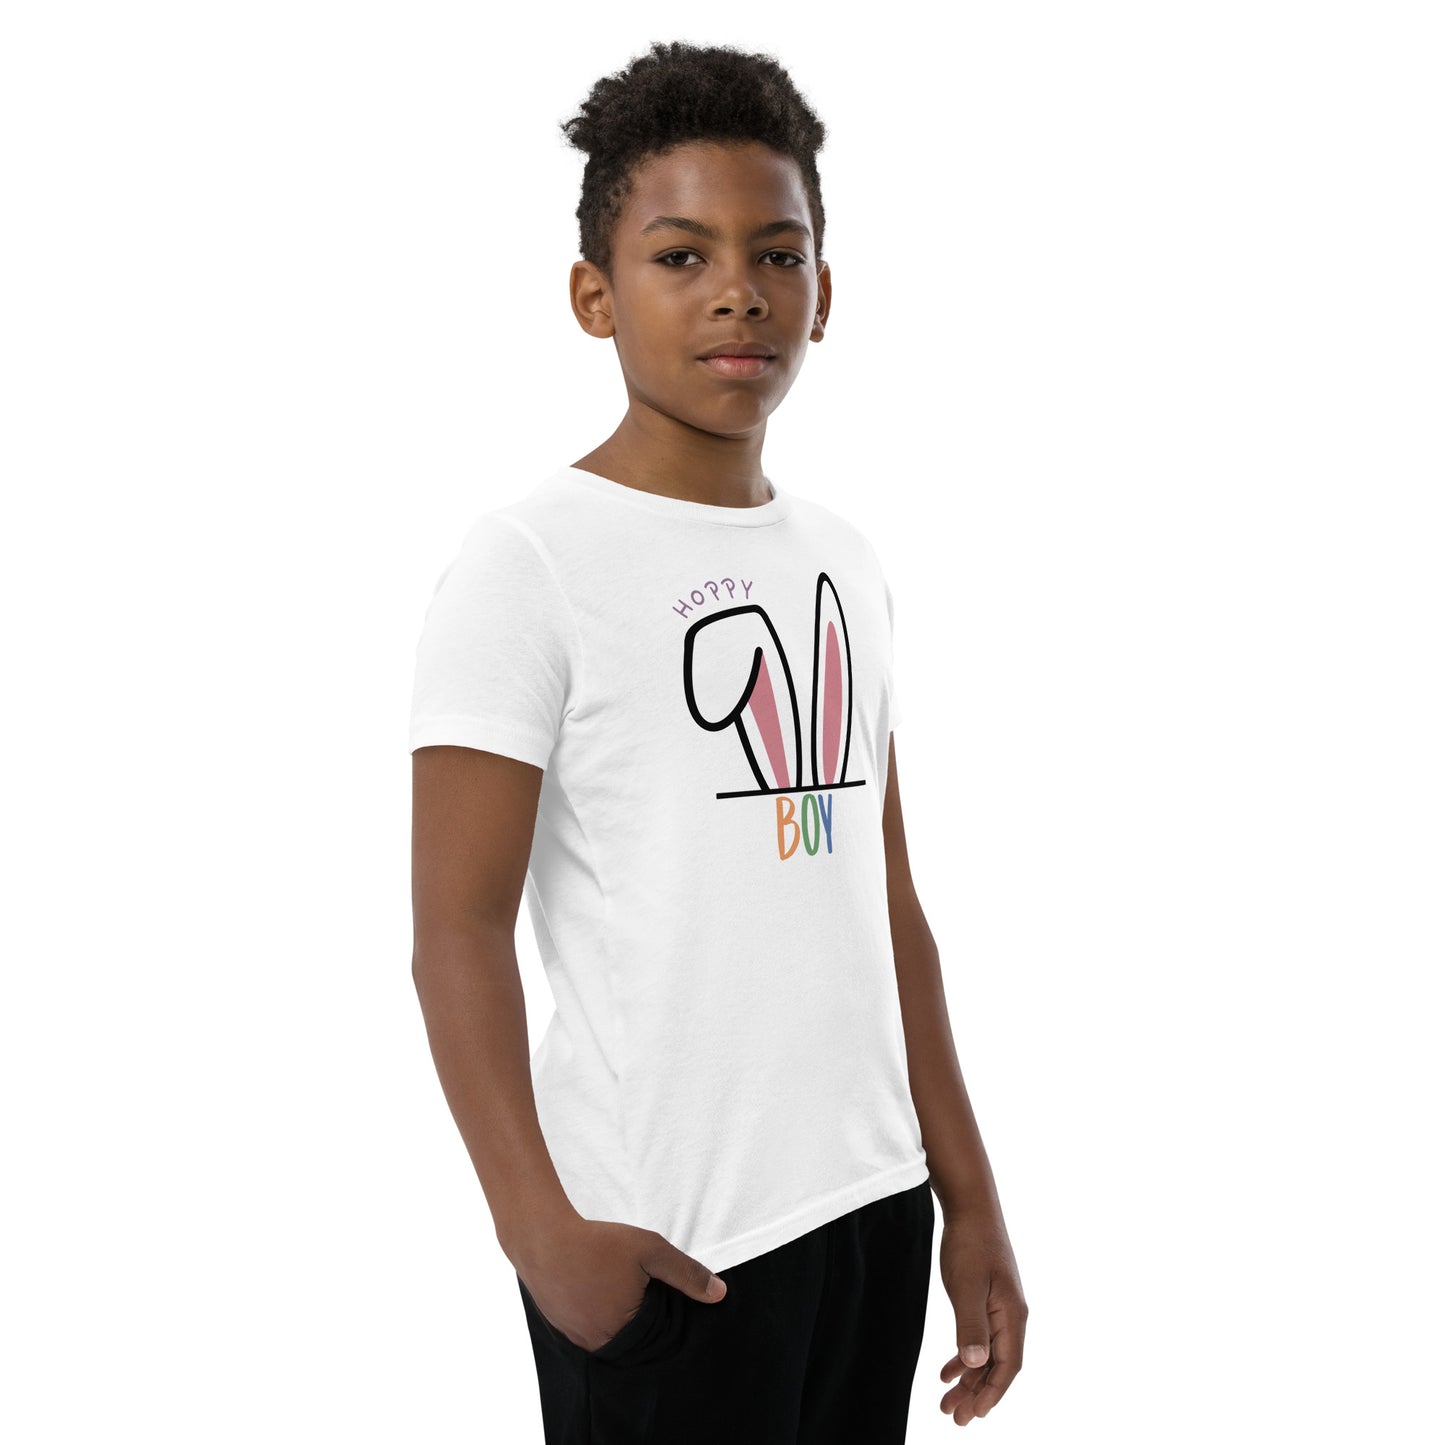 Hoppy Boy Youth T-Shirt